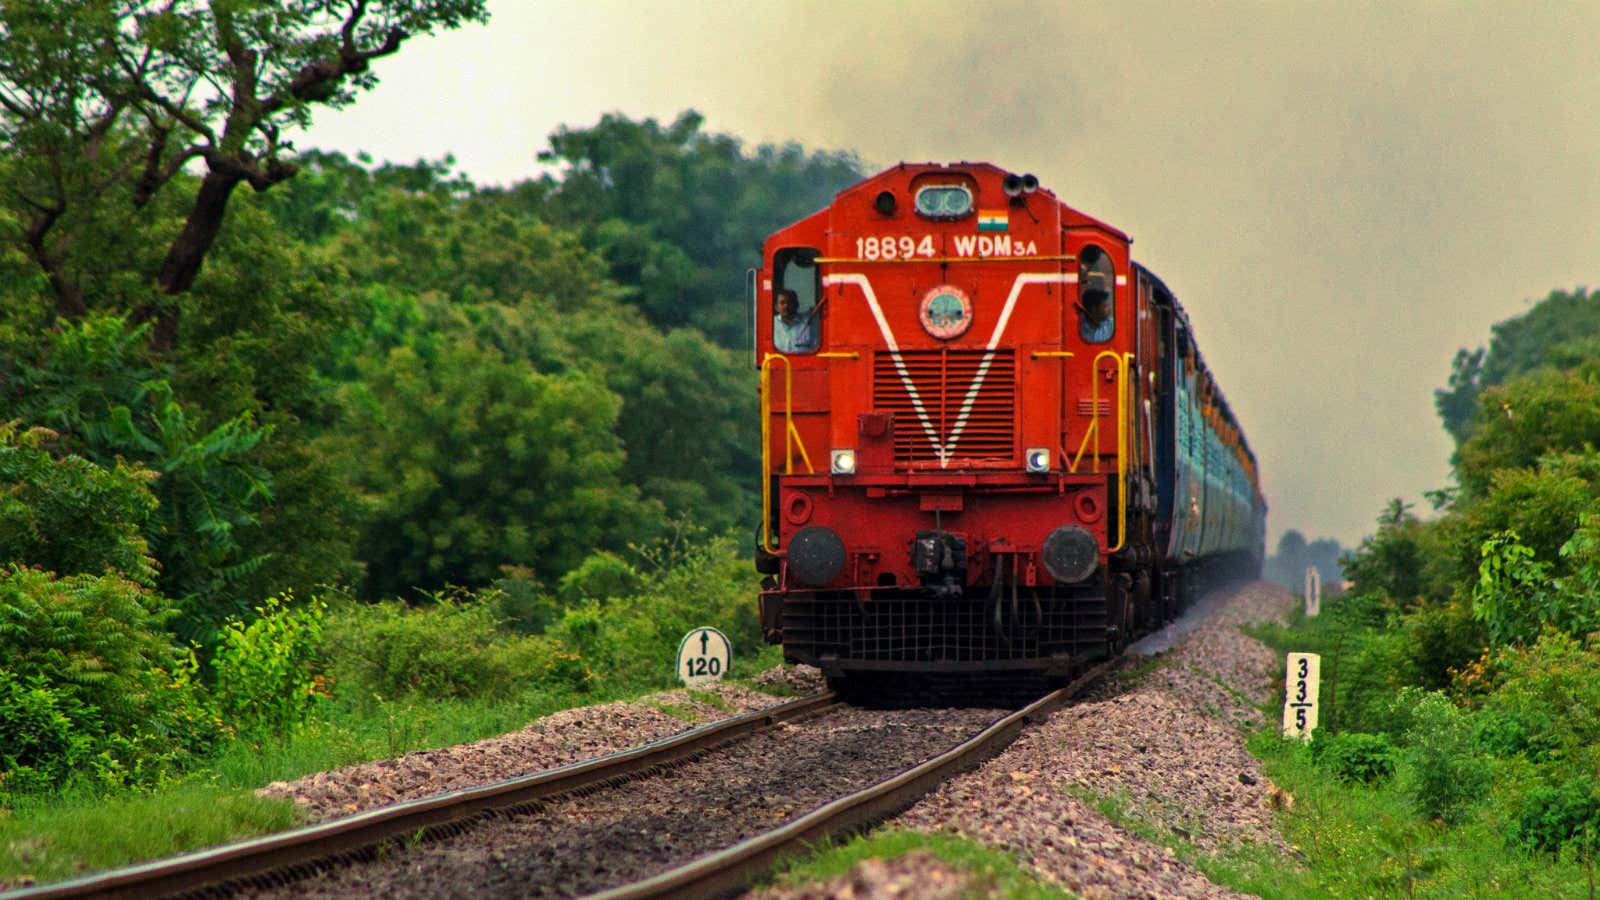 IMG_0576a | India railway, Train wallpaper, Indian railways